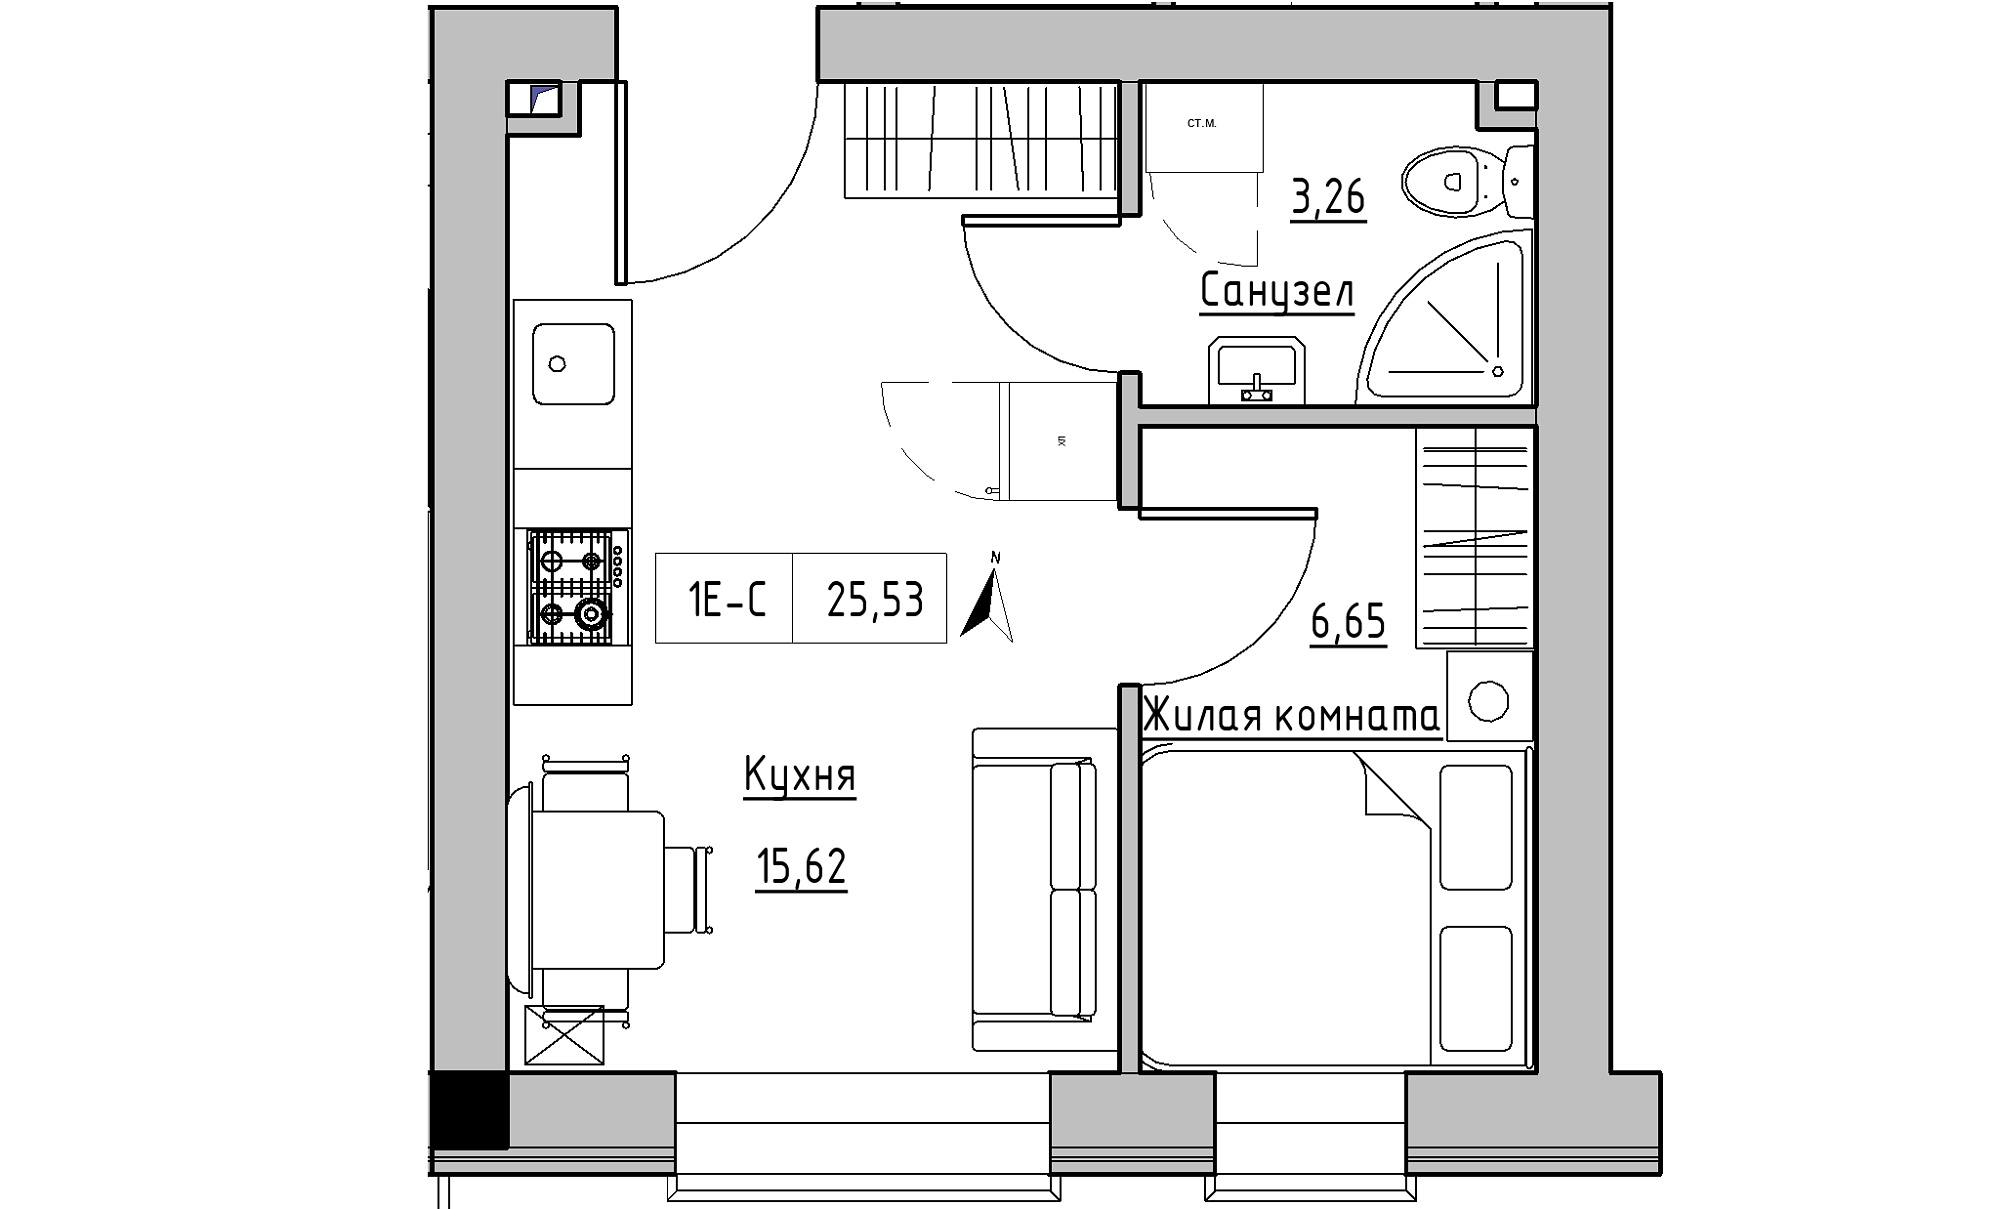 Planning 1-rm flats area 25.53m2, KS-016-04/0004.